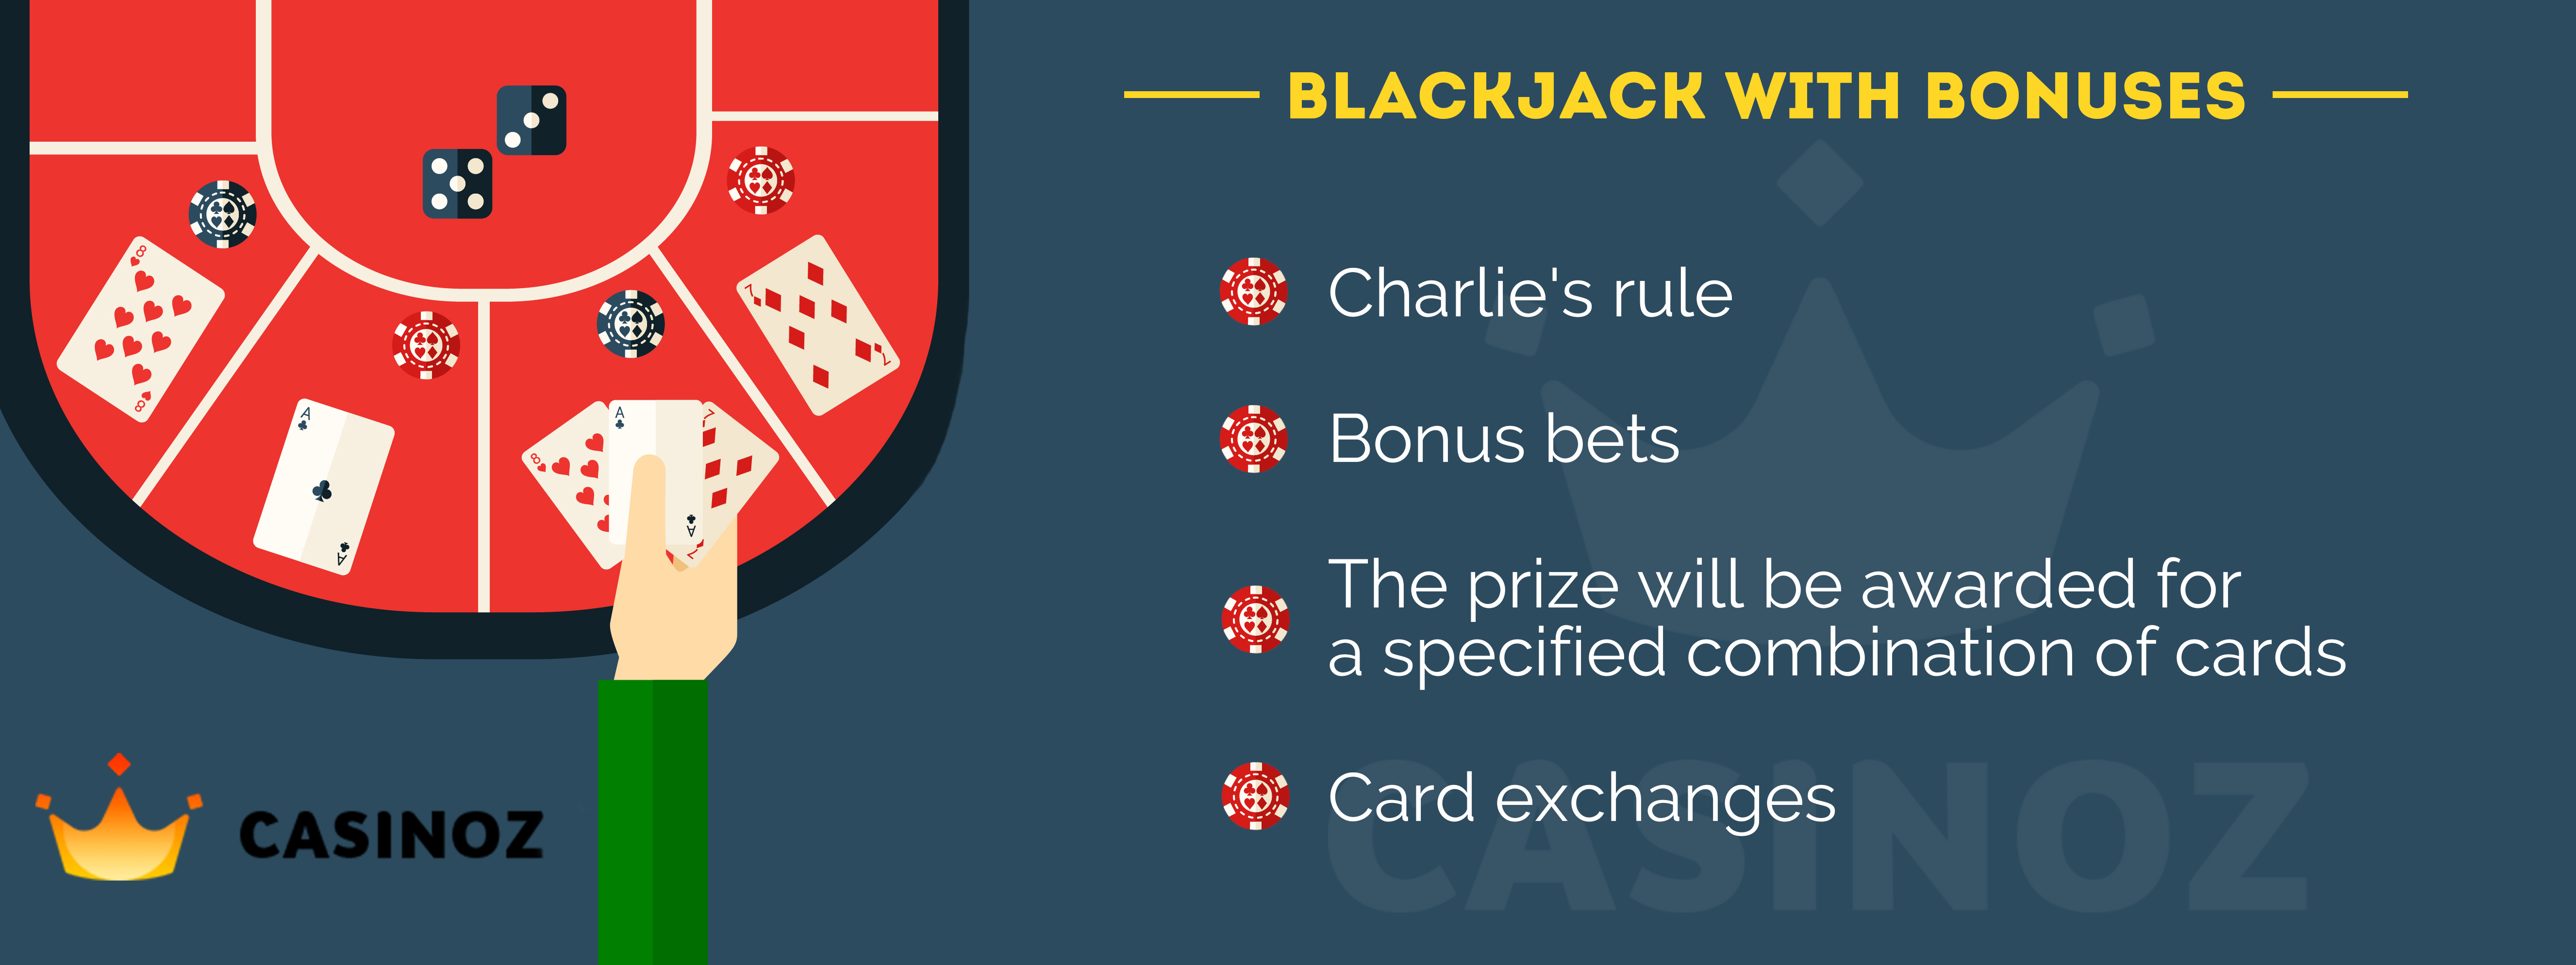 snoqualmie casino blackjack rules